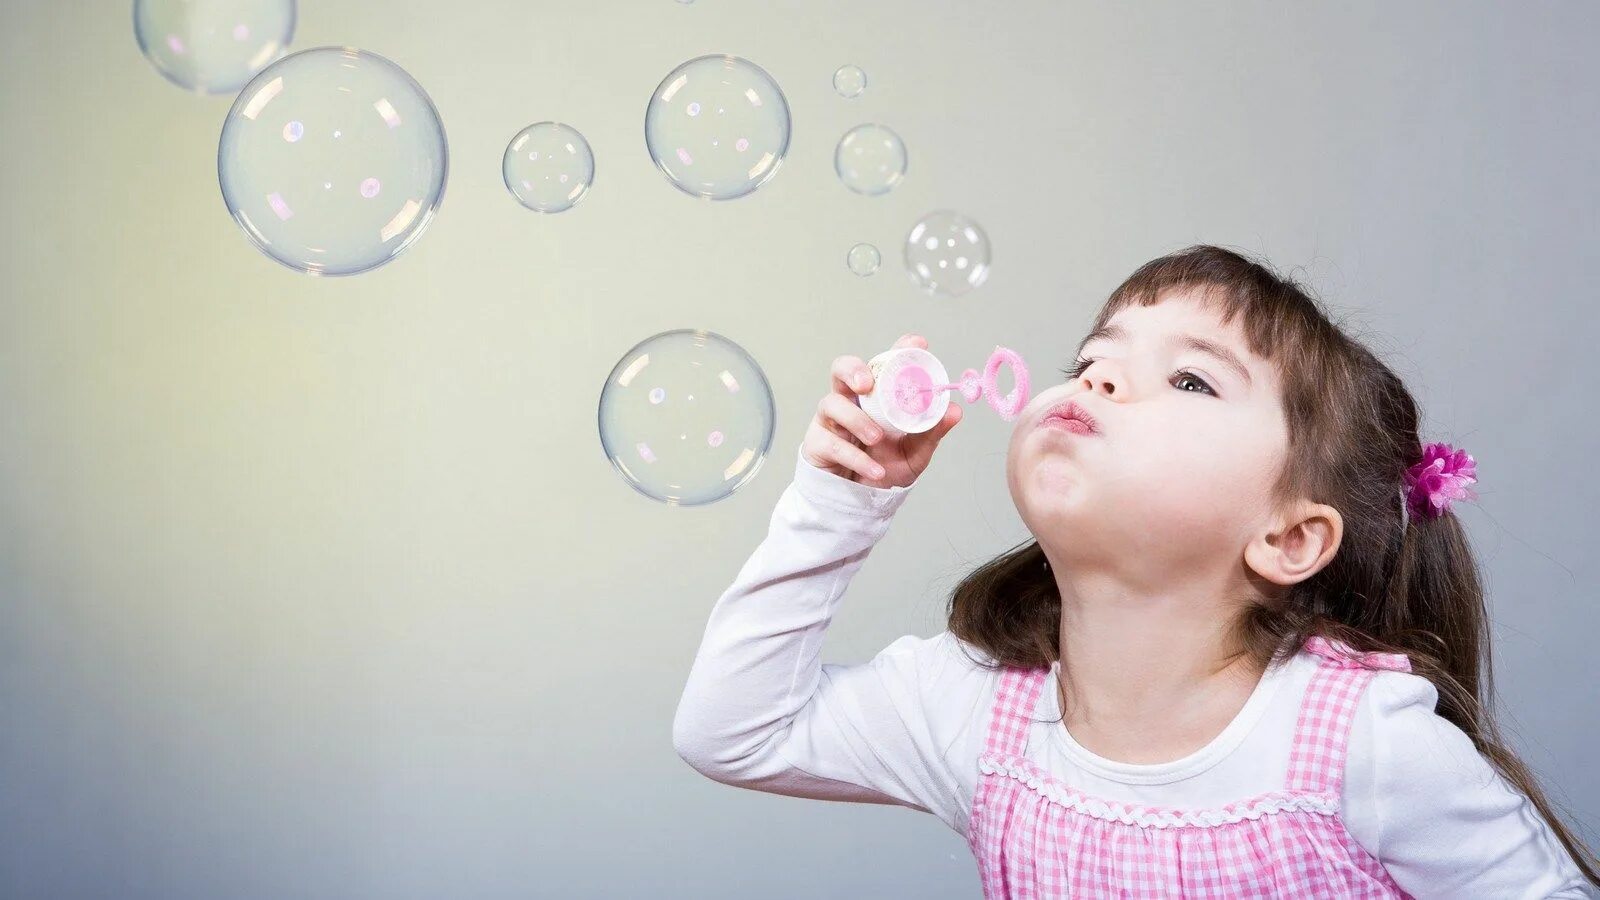 Дышу шарами. Мыльные пузыри. Дети и мыльные пузыри. Дует мыльные пузыри. Девочка дует мыльные пузыри.